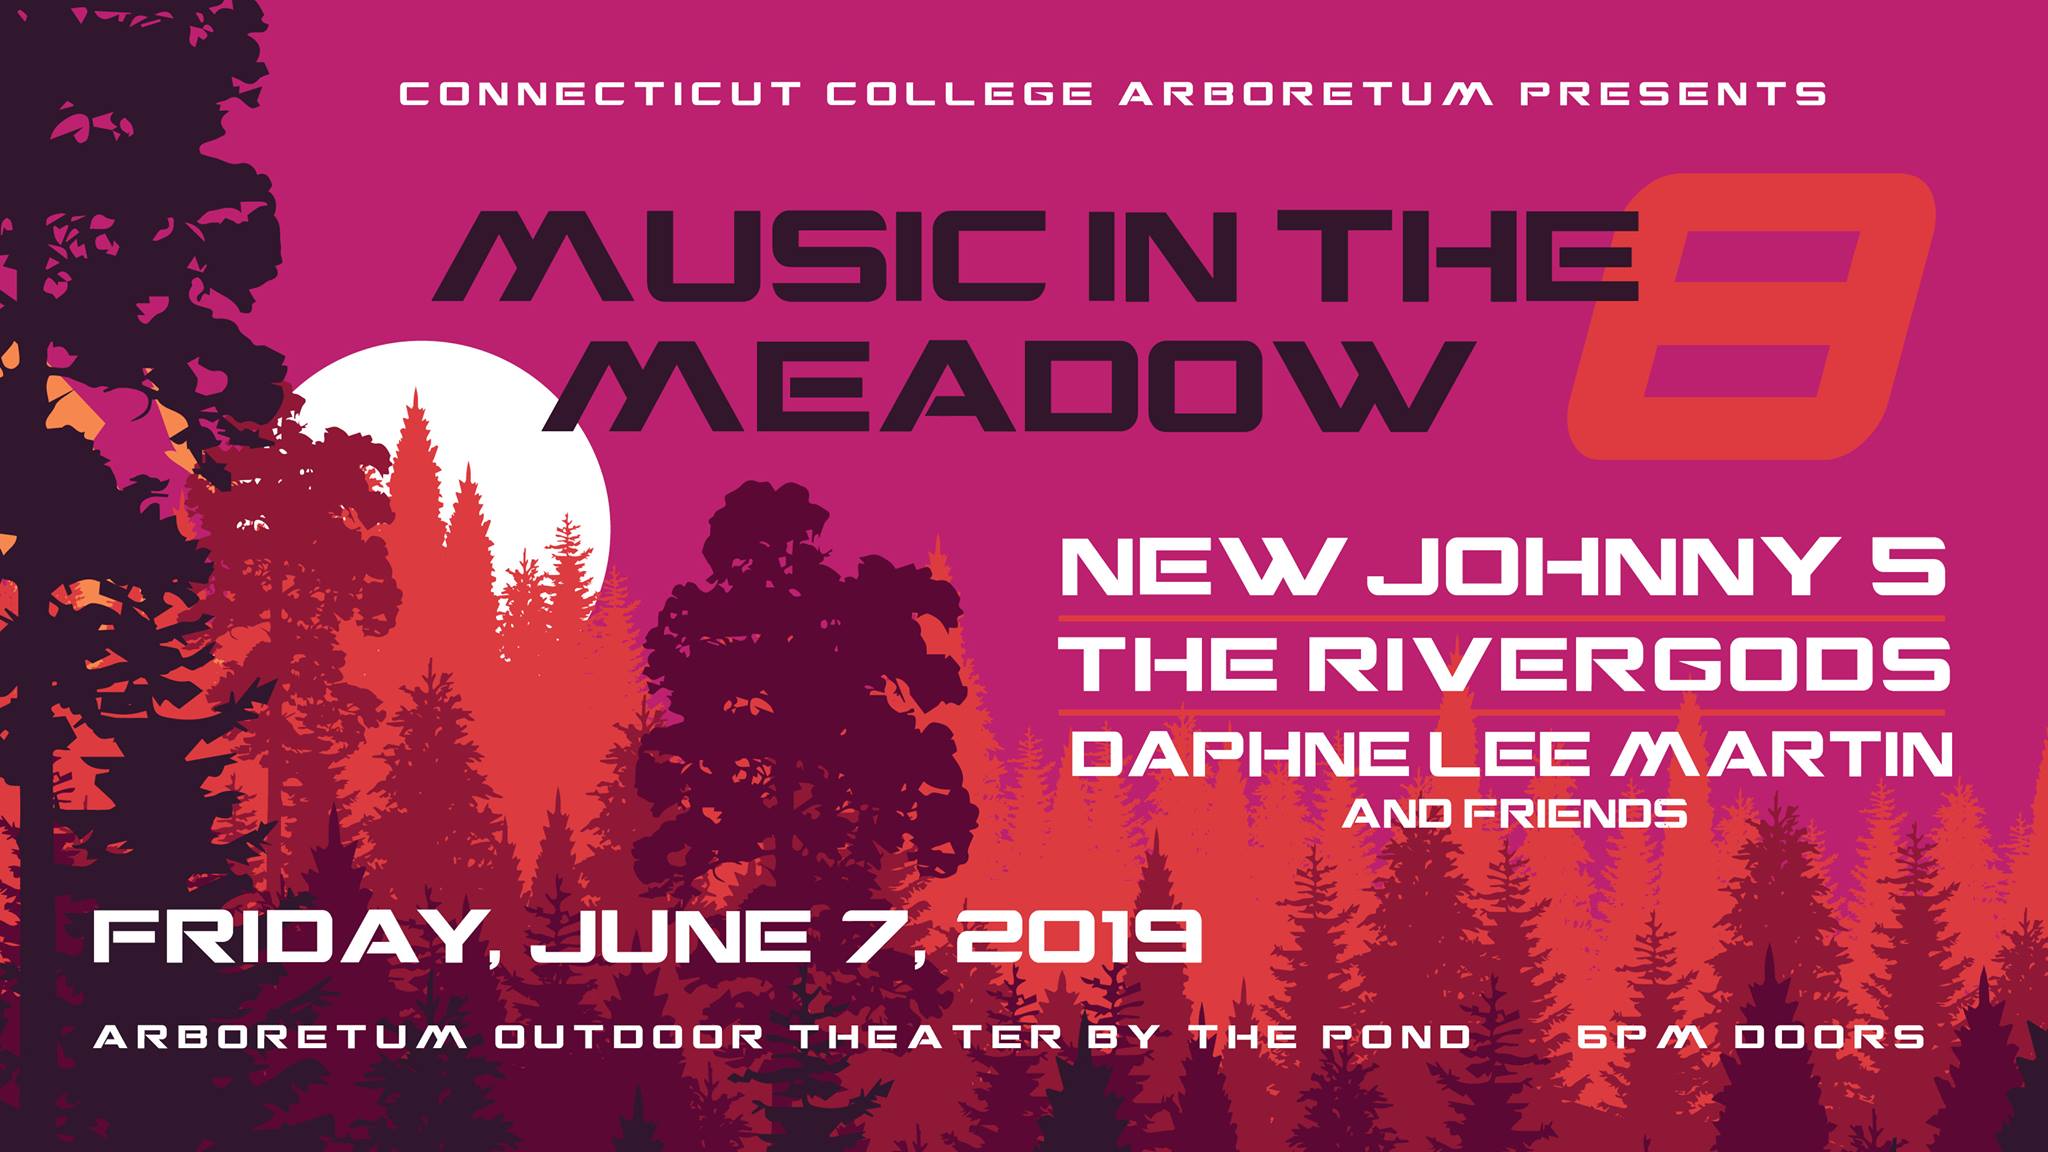 Music in the Meadow at Connecticut College Arboretum